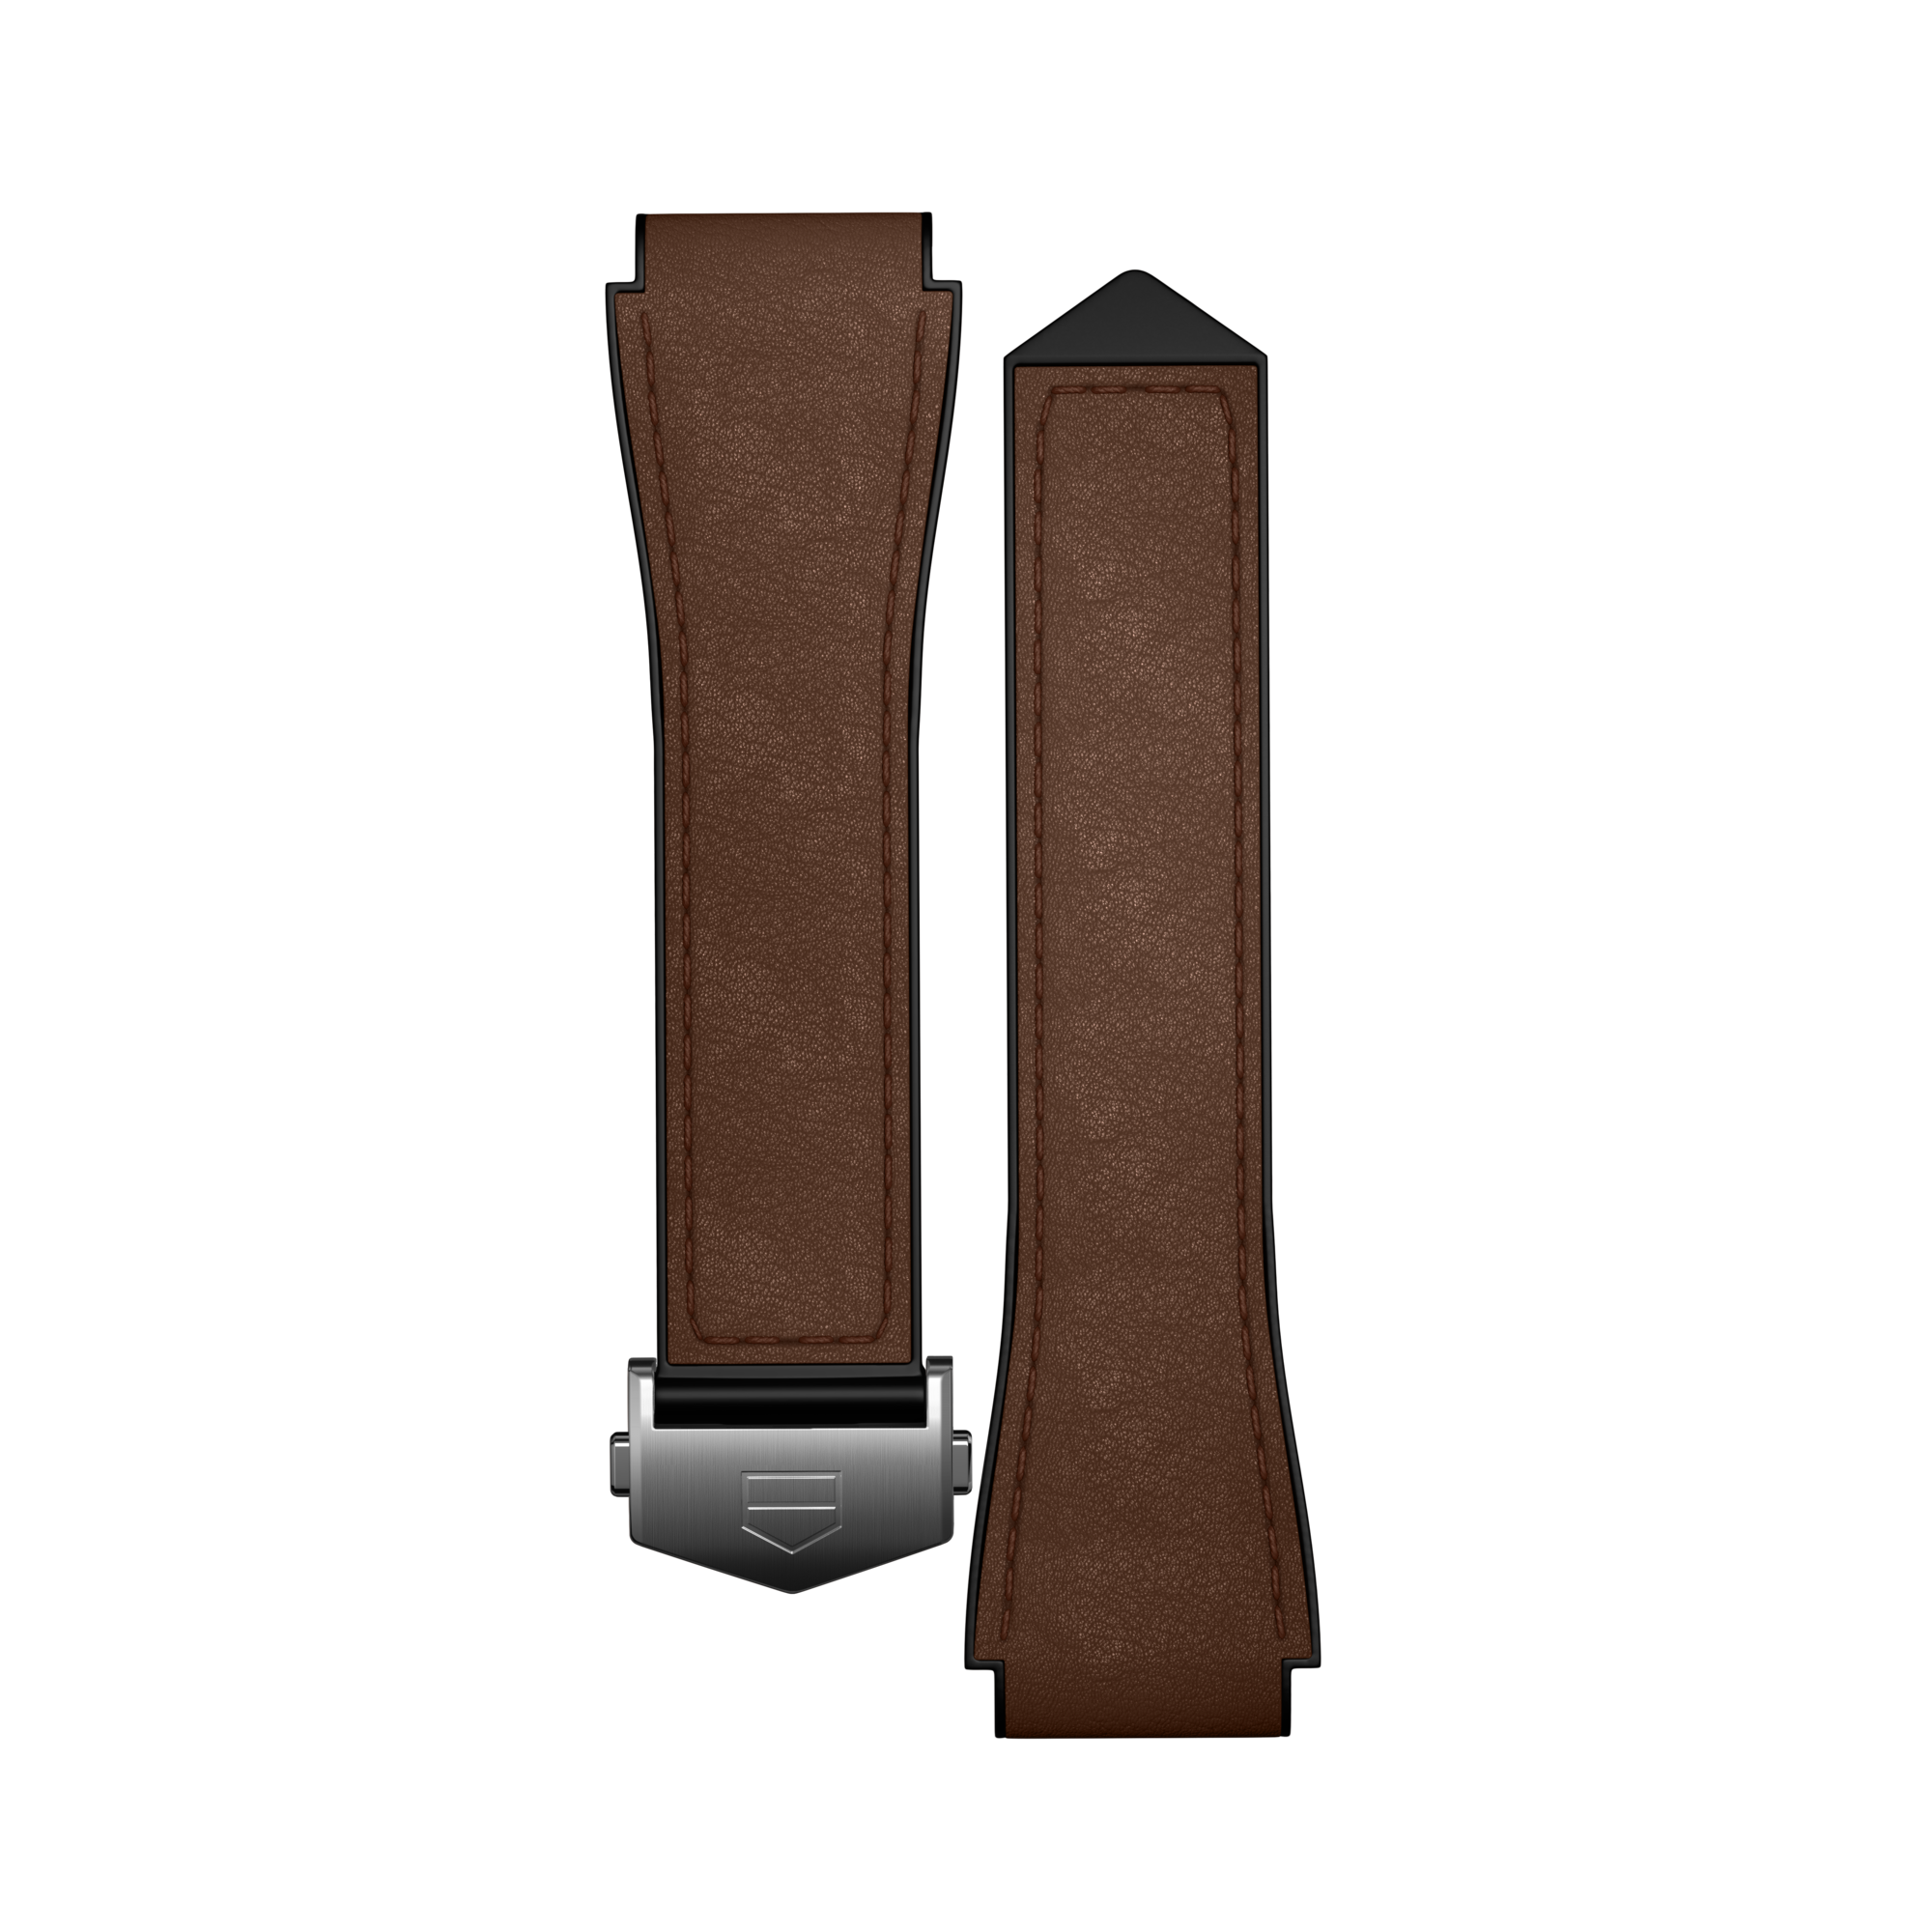 Series 7 Satin Gunmetal Dial on Leather Belt